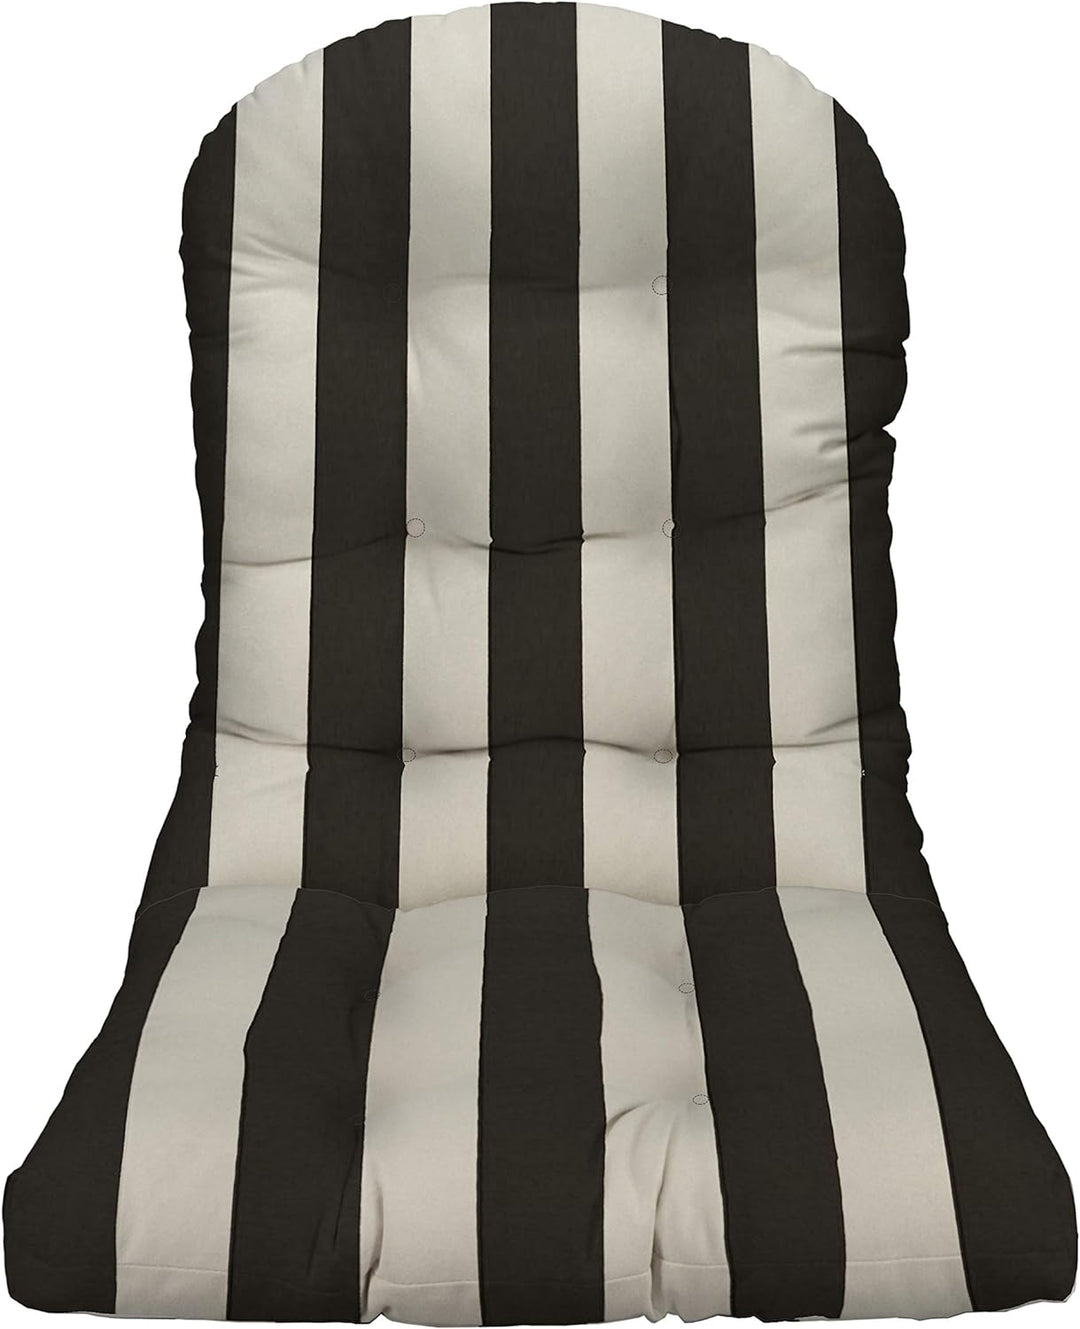 Tufted Adirondack Cushion | 42.5” H x 21” W | Black & White Stripe | SUMMER FLASH SALE - RSH Decor